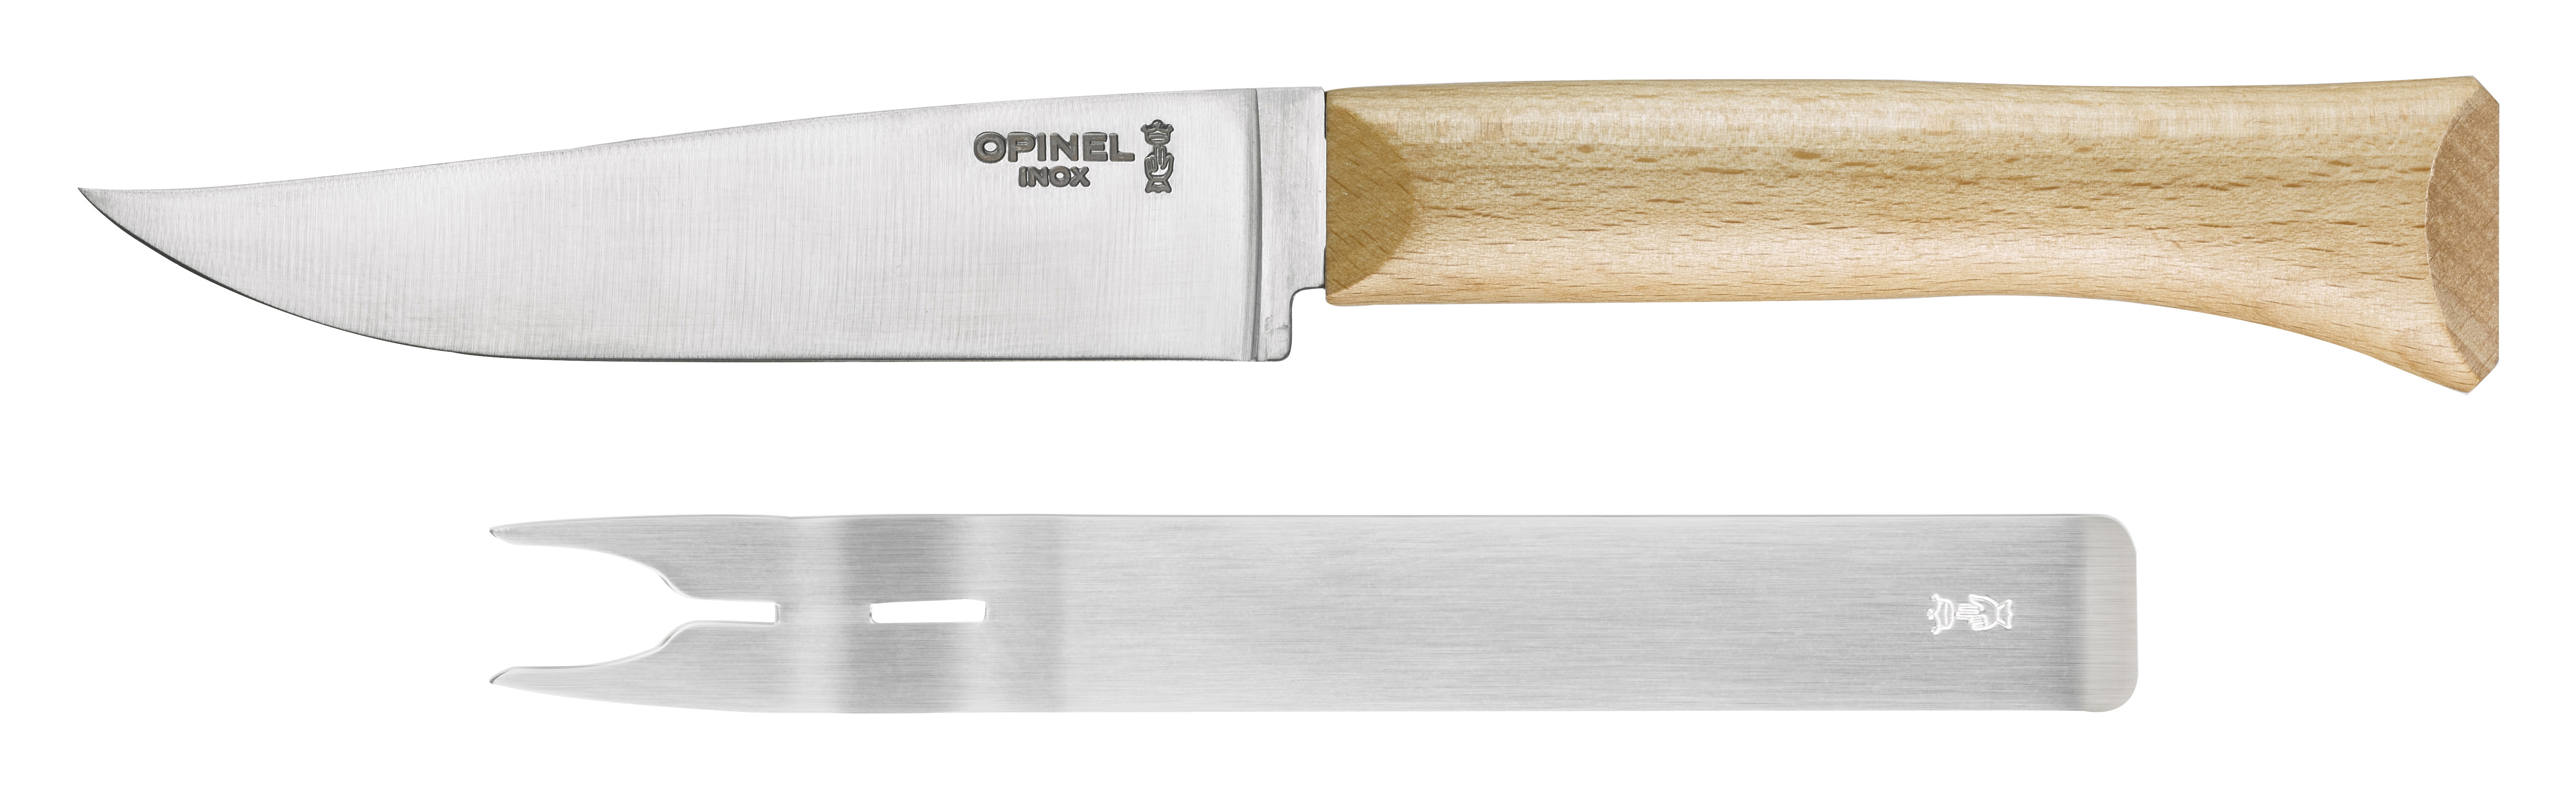 Набор ножей для резки сыра (нож+ вилка), Opinel 001834